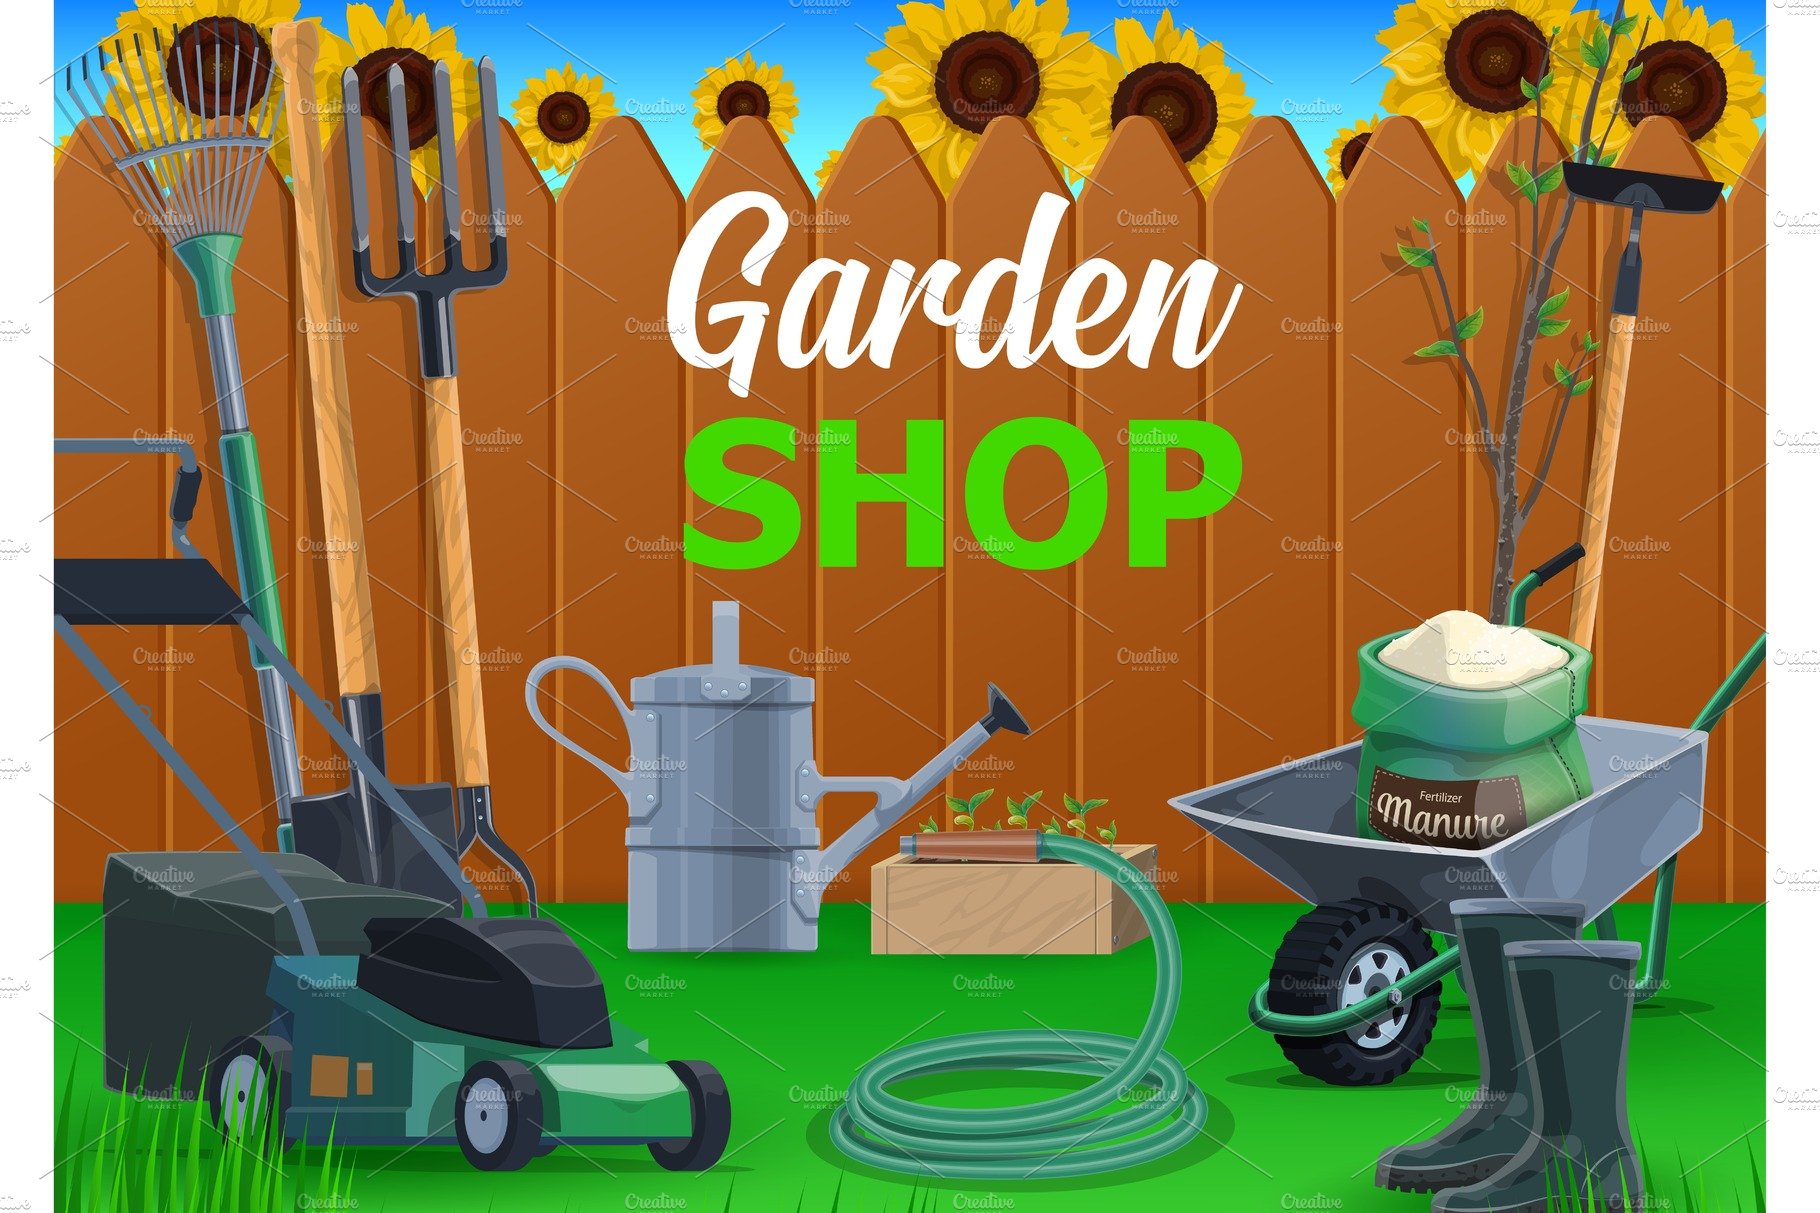 Garden tools, shovel, pitchfork cover image.